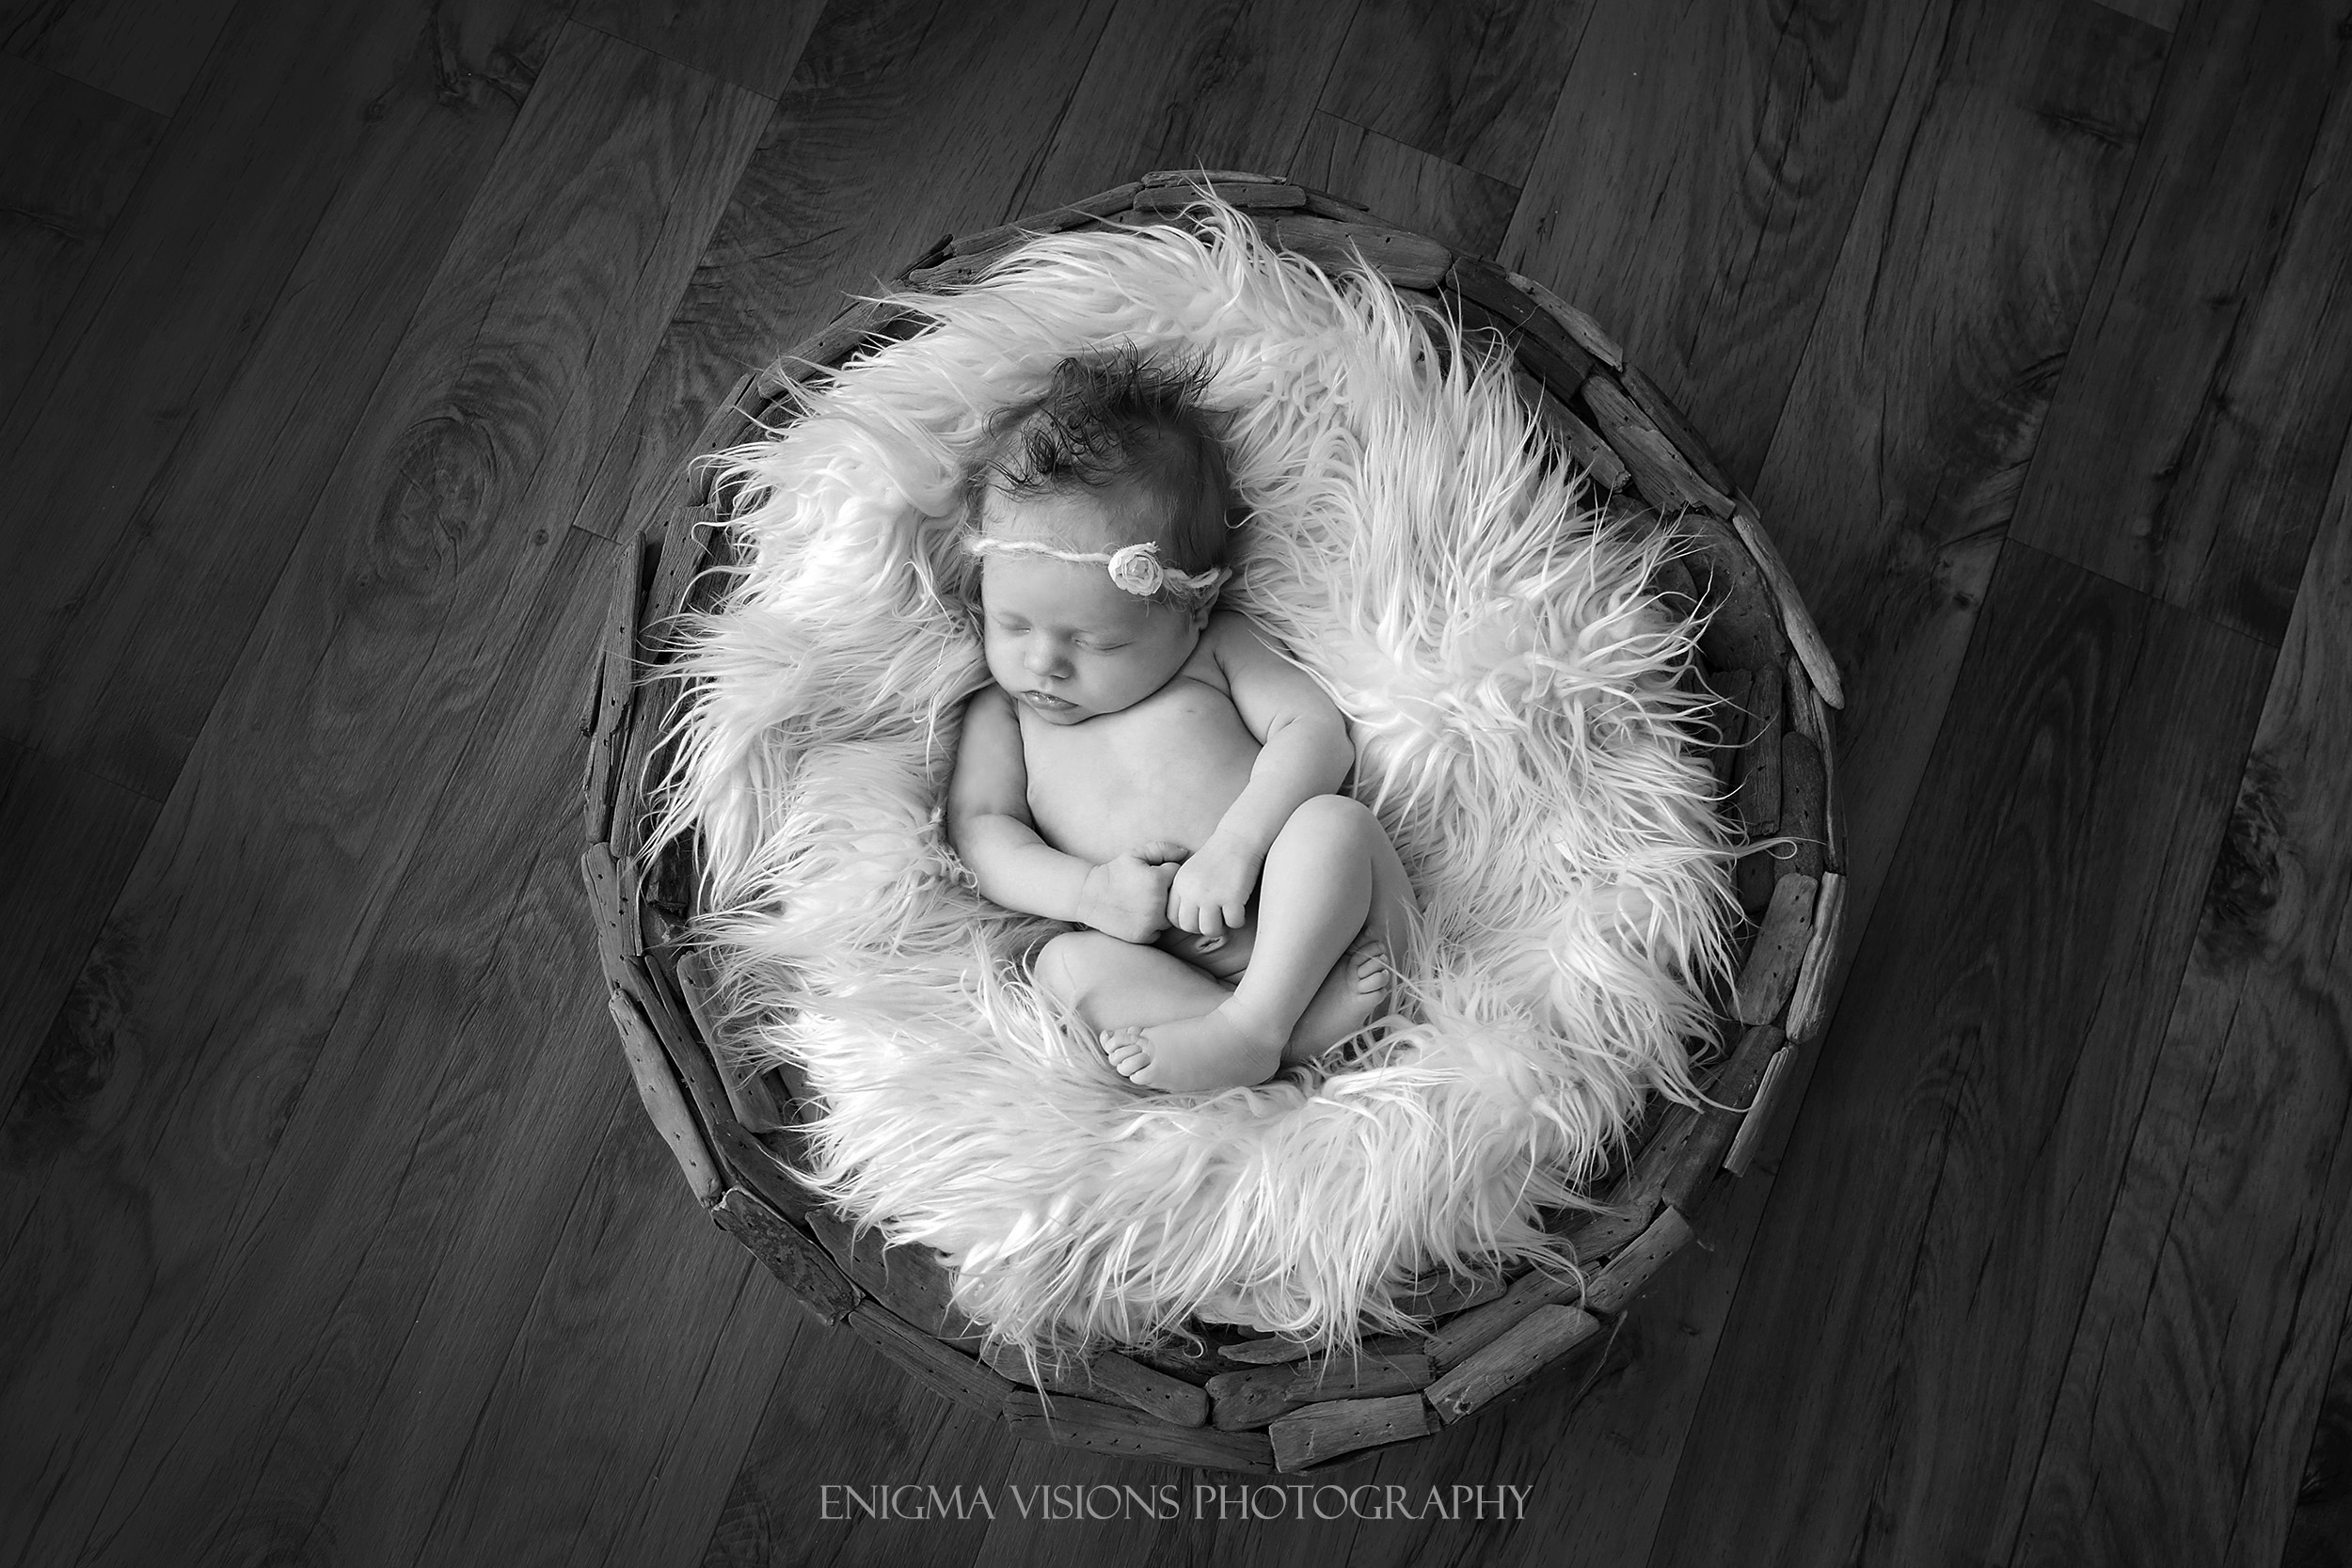 enigma_visions_photography_newborn (10).jpg